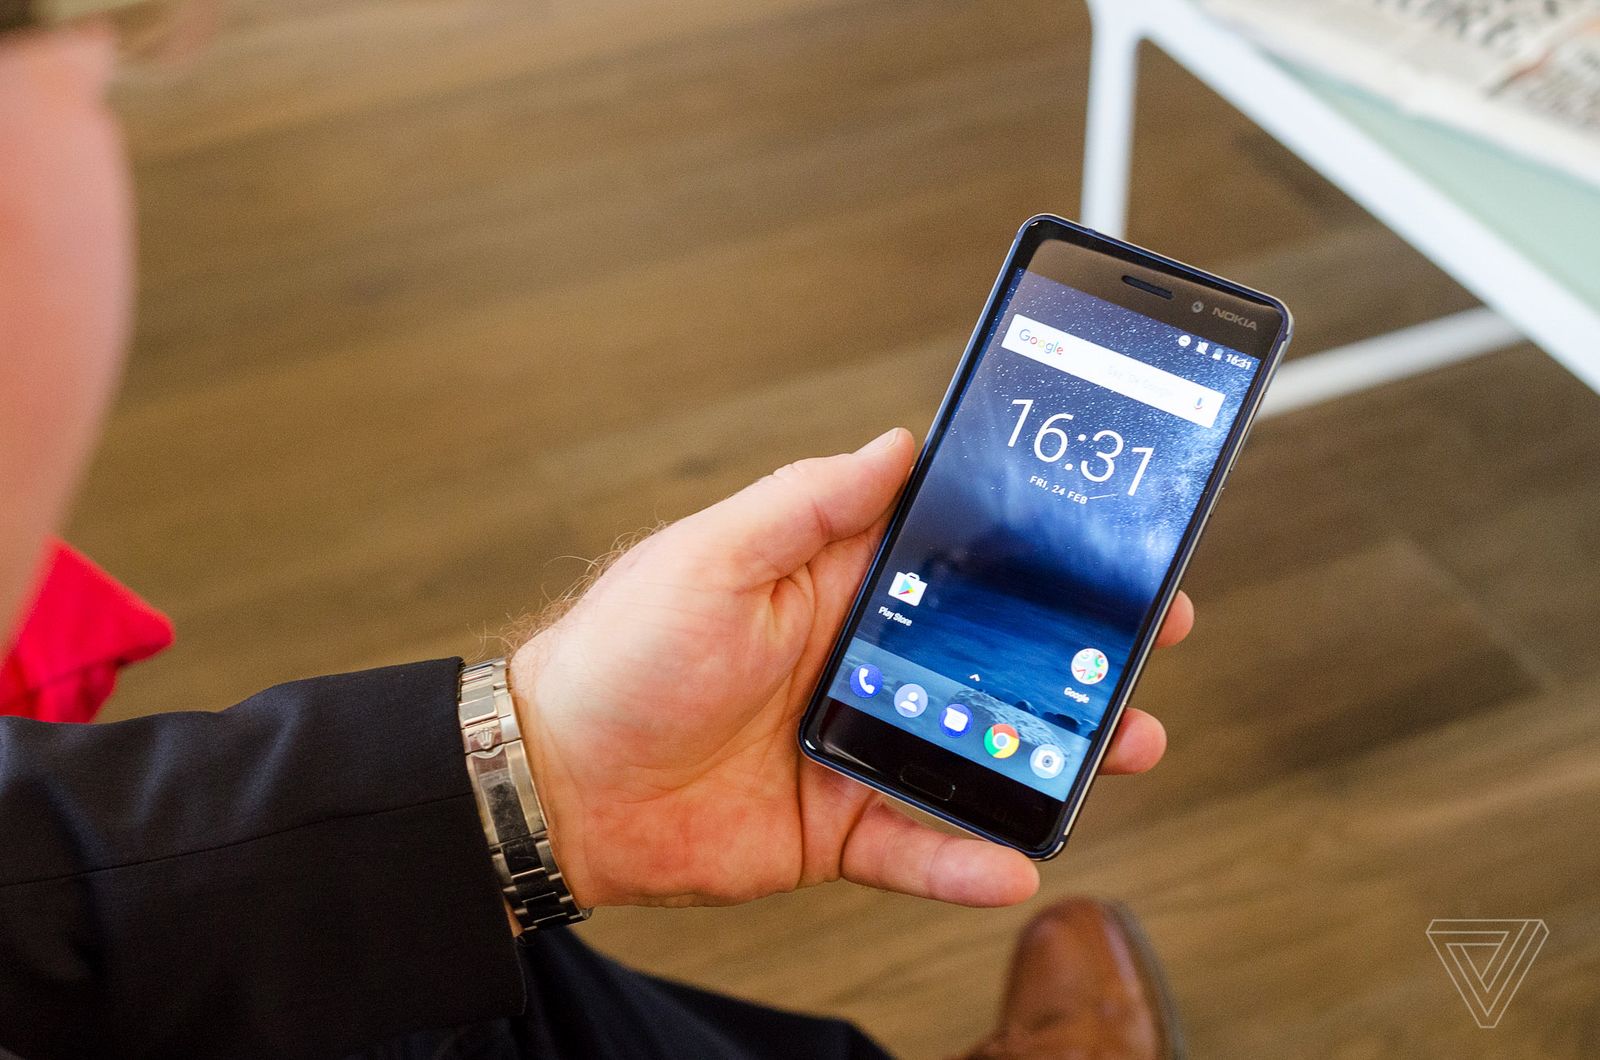 Nokia 3, Nokia 5 и Nokia 6 на Android 7.0 представлены официально